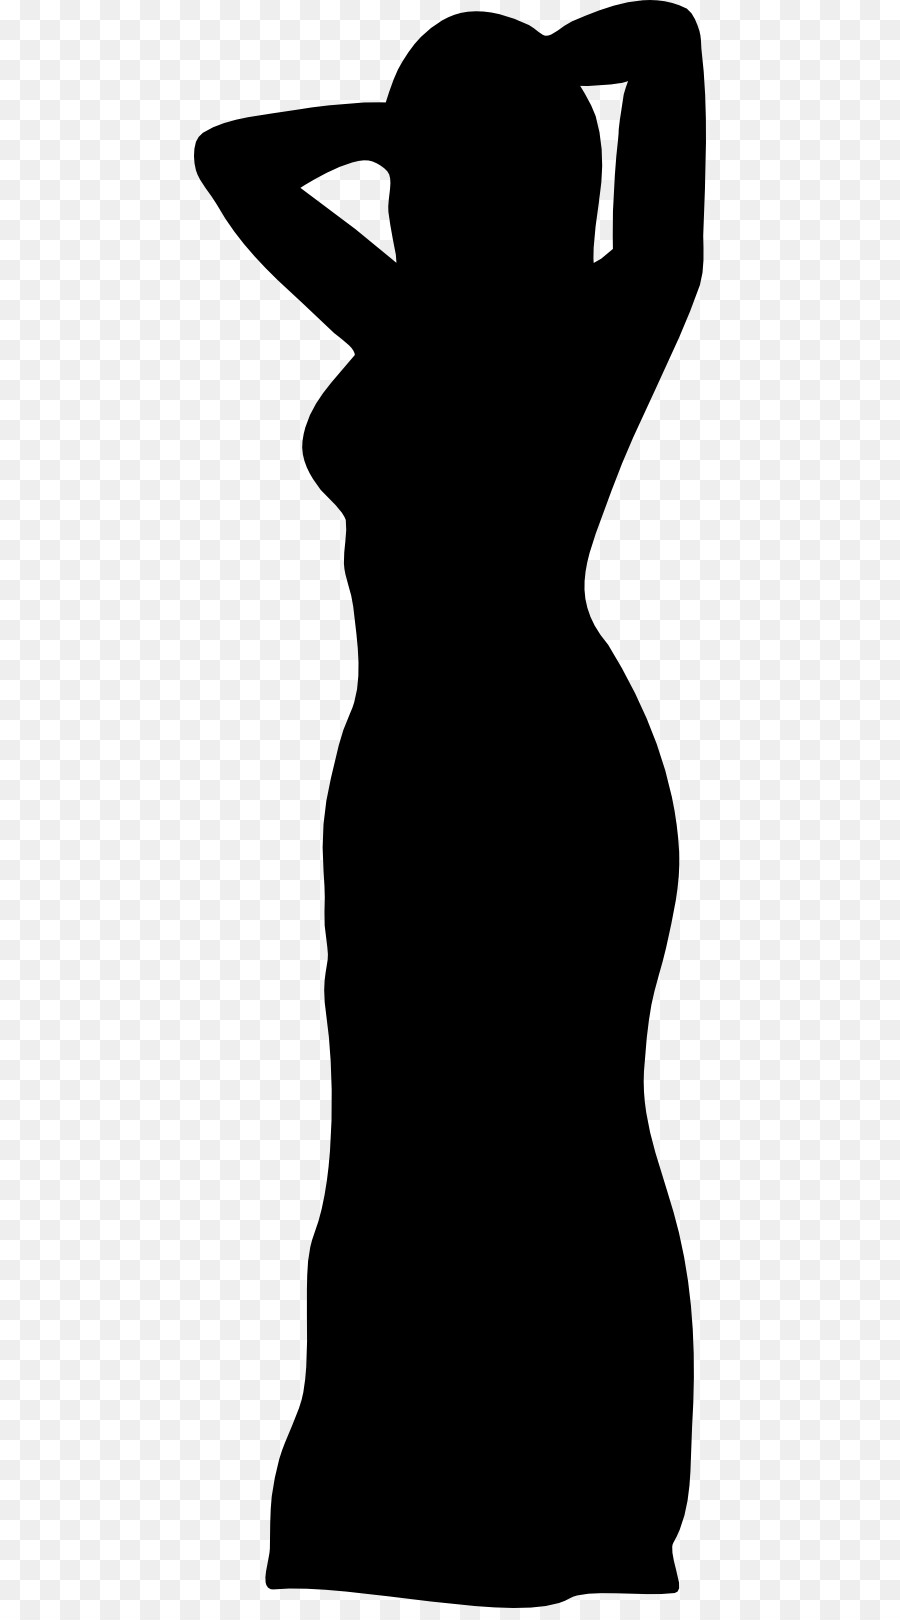 Dress Woman Clip art - dresses png download - 512*1608 - Free Transparent Dress png Download.